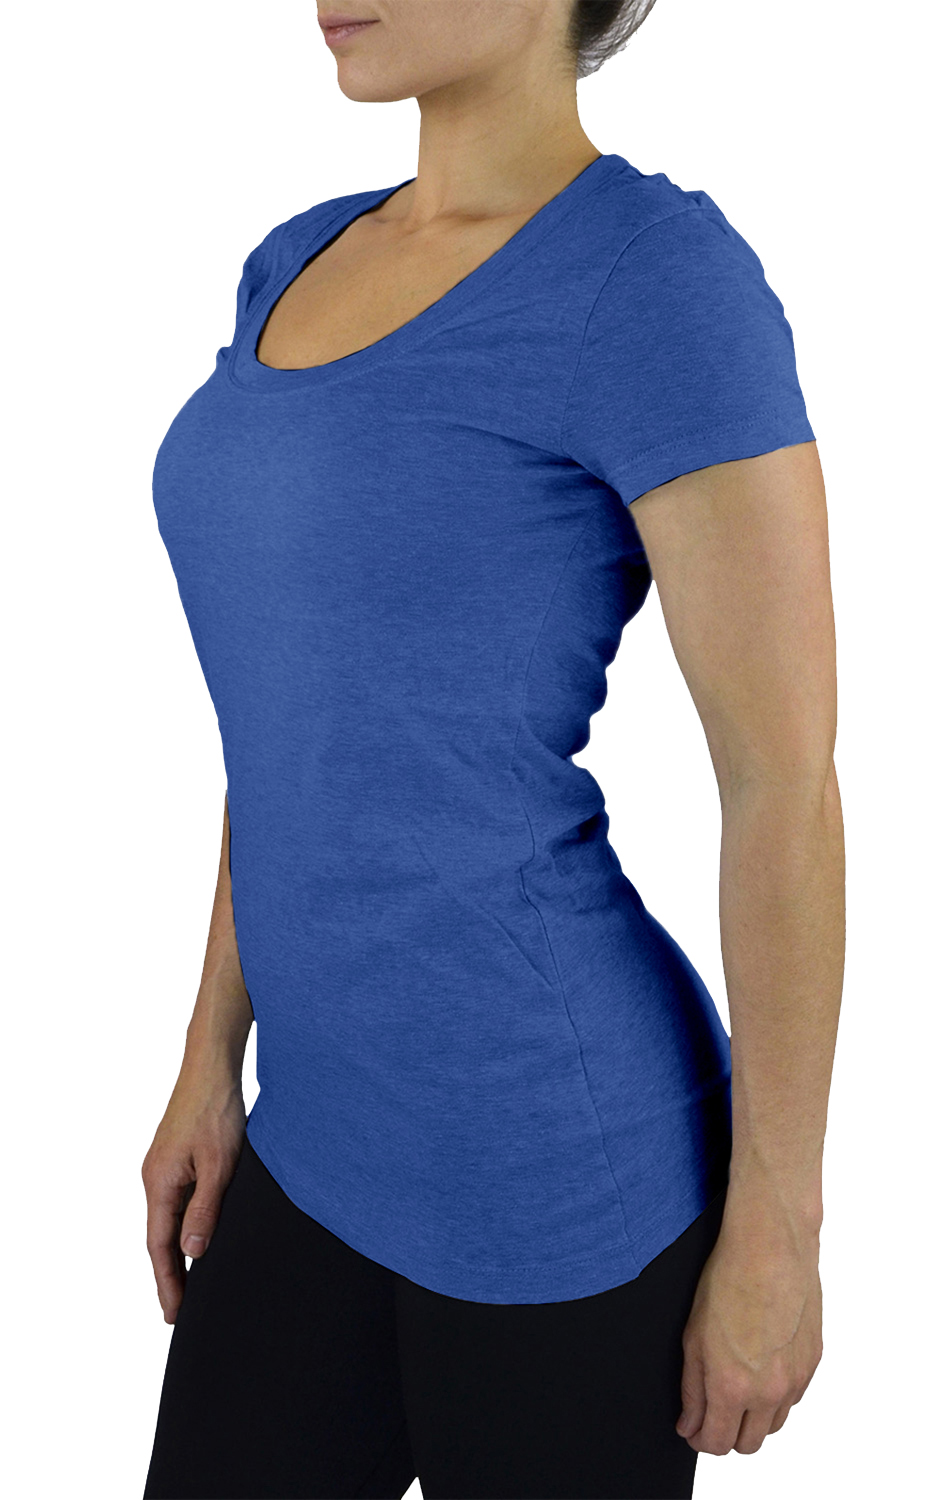 Belle Donne- Women's T Shirt Stretchy Scoop Neck Workout Yoga Cotton T-Shirt - Bright Blue Large